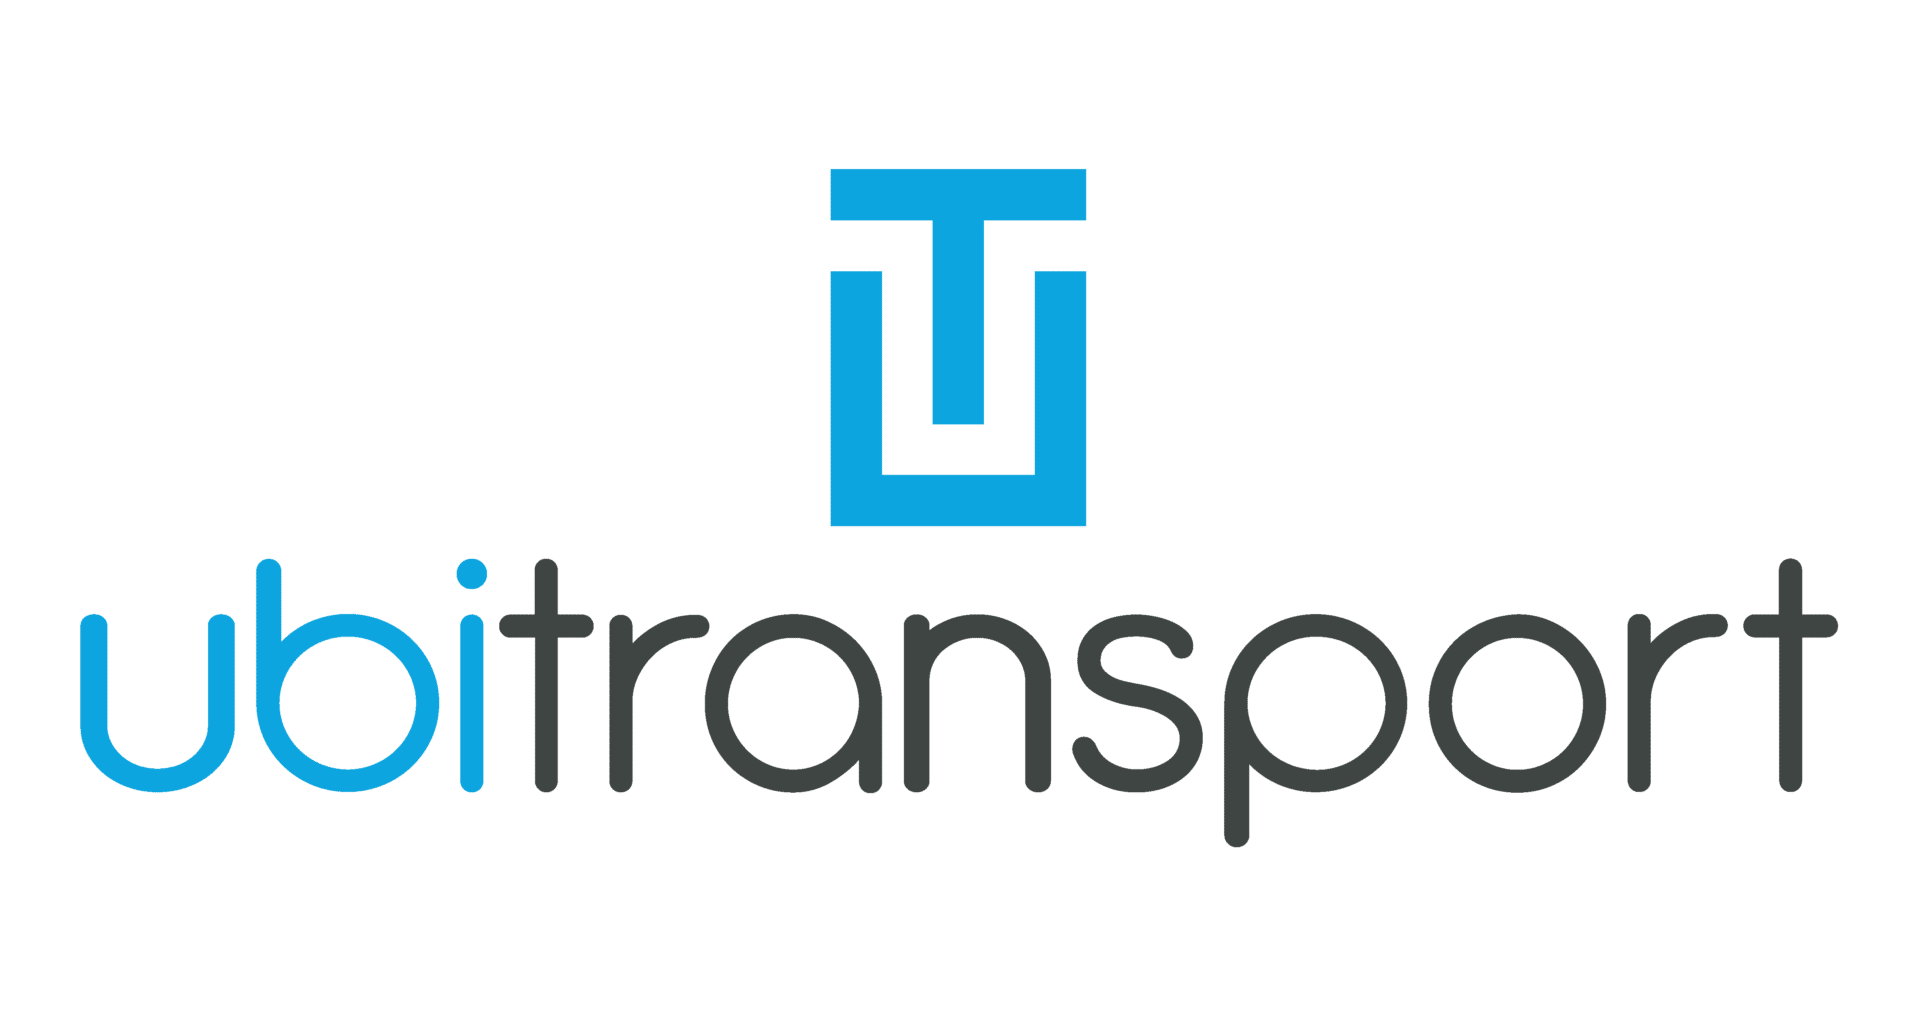 Logo Ubitransport